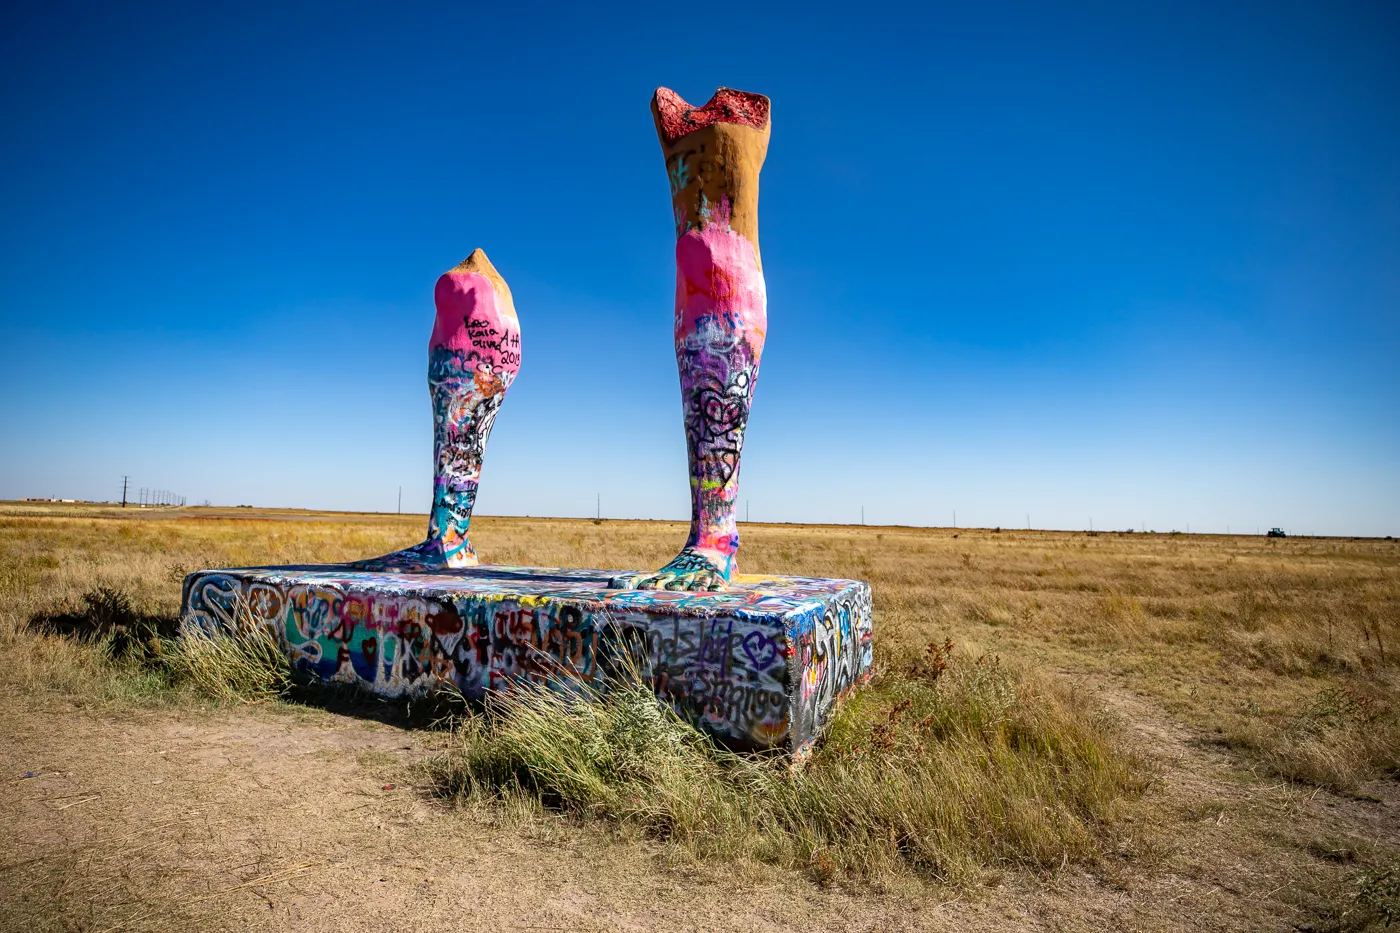 Ozymandias on the Plains in Amarillo, Texas -Big Legs roadside attraction on Route 66